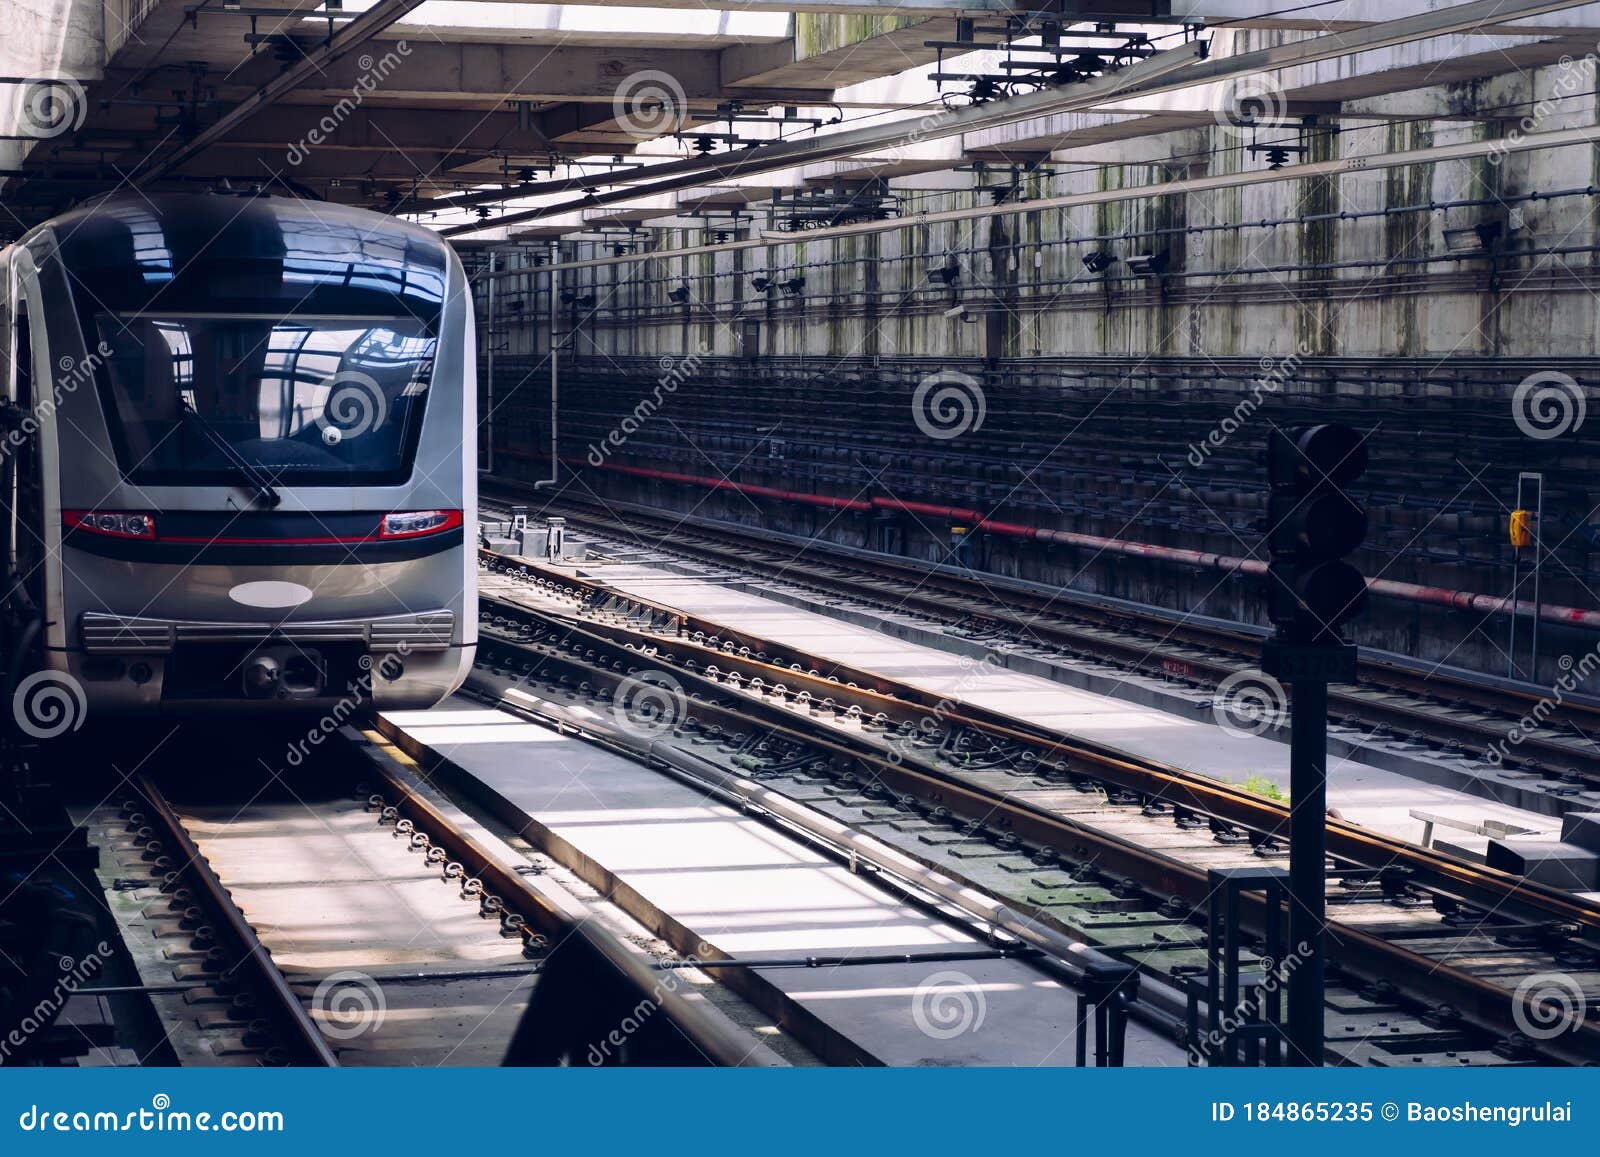 the loop train of chongqing subway is coming slowly